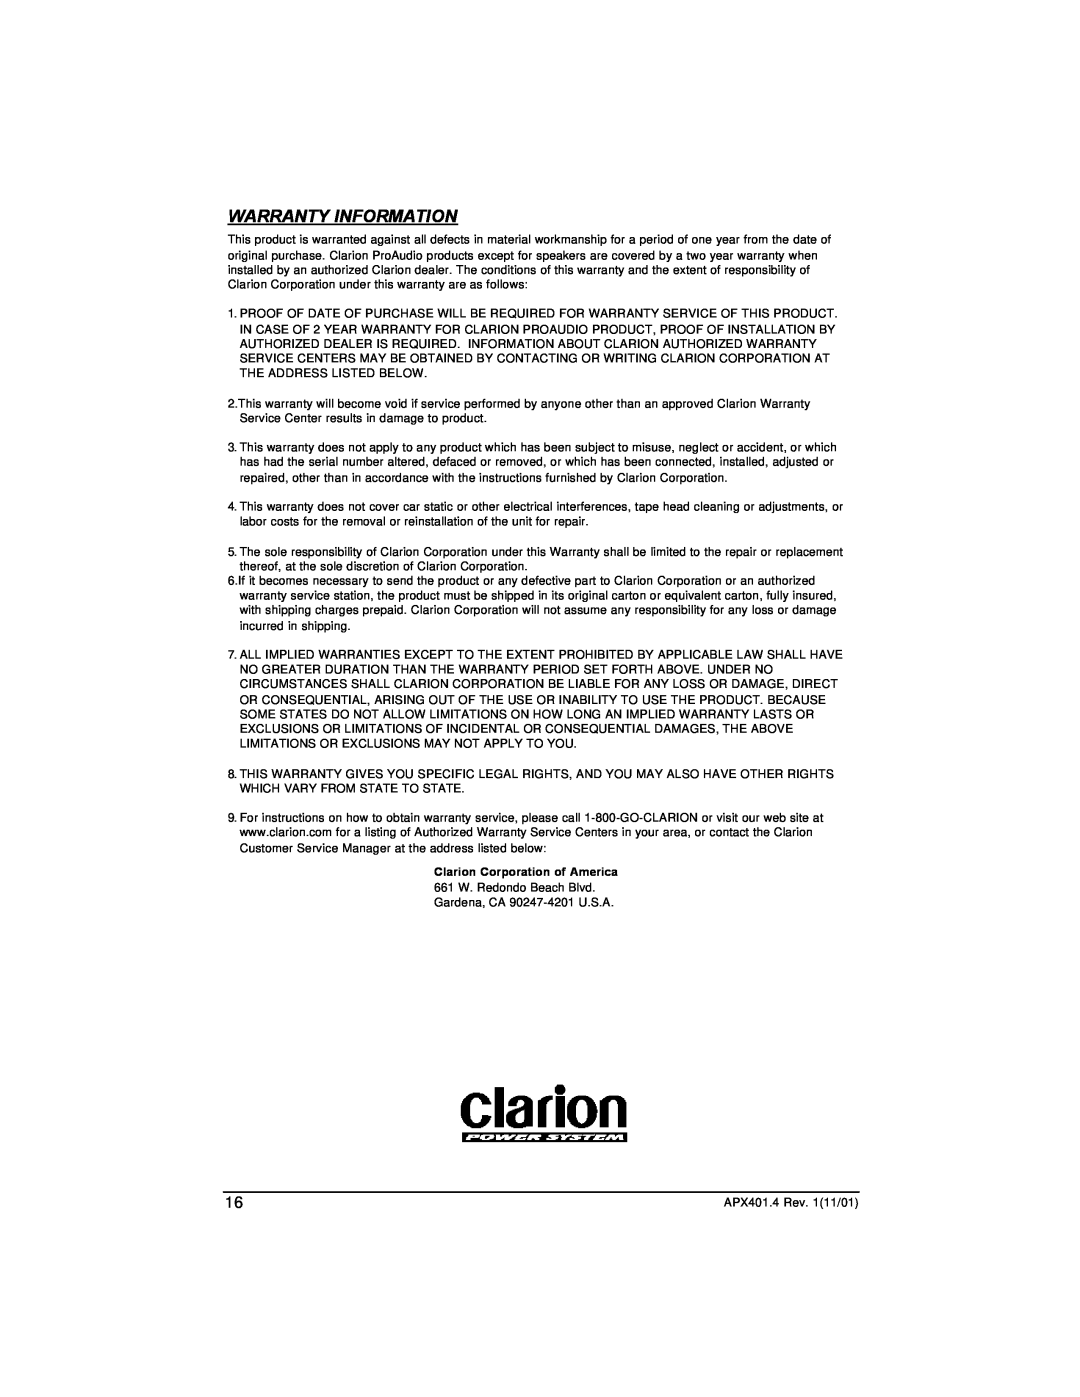 Clarion APX401.4 installation manual Warranty Information, Clarion Corporation of America 